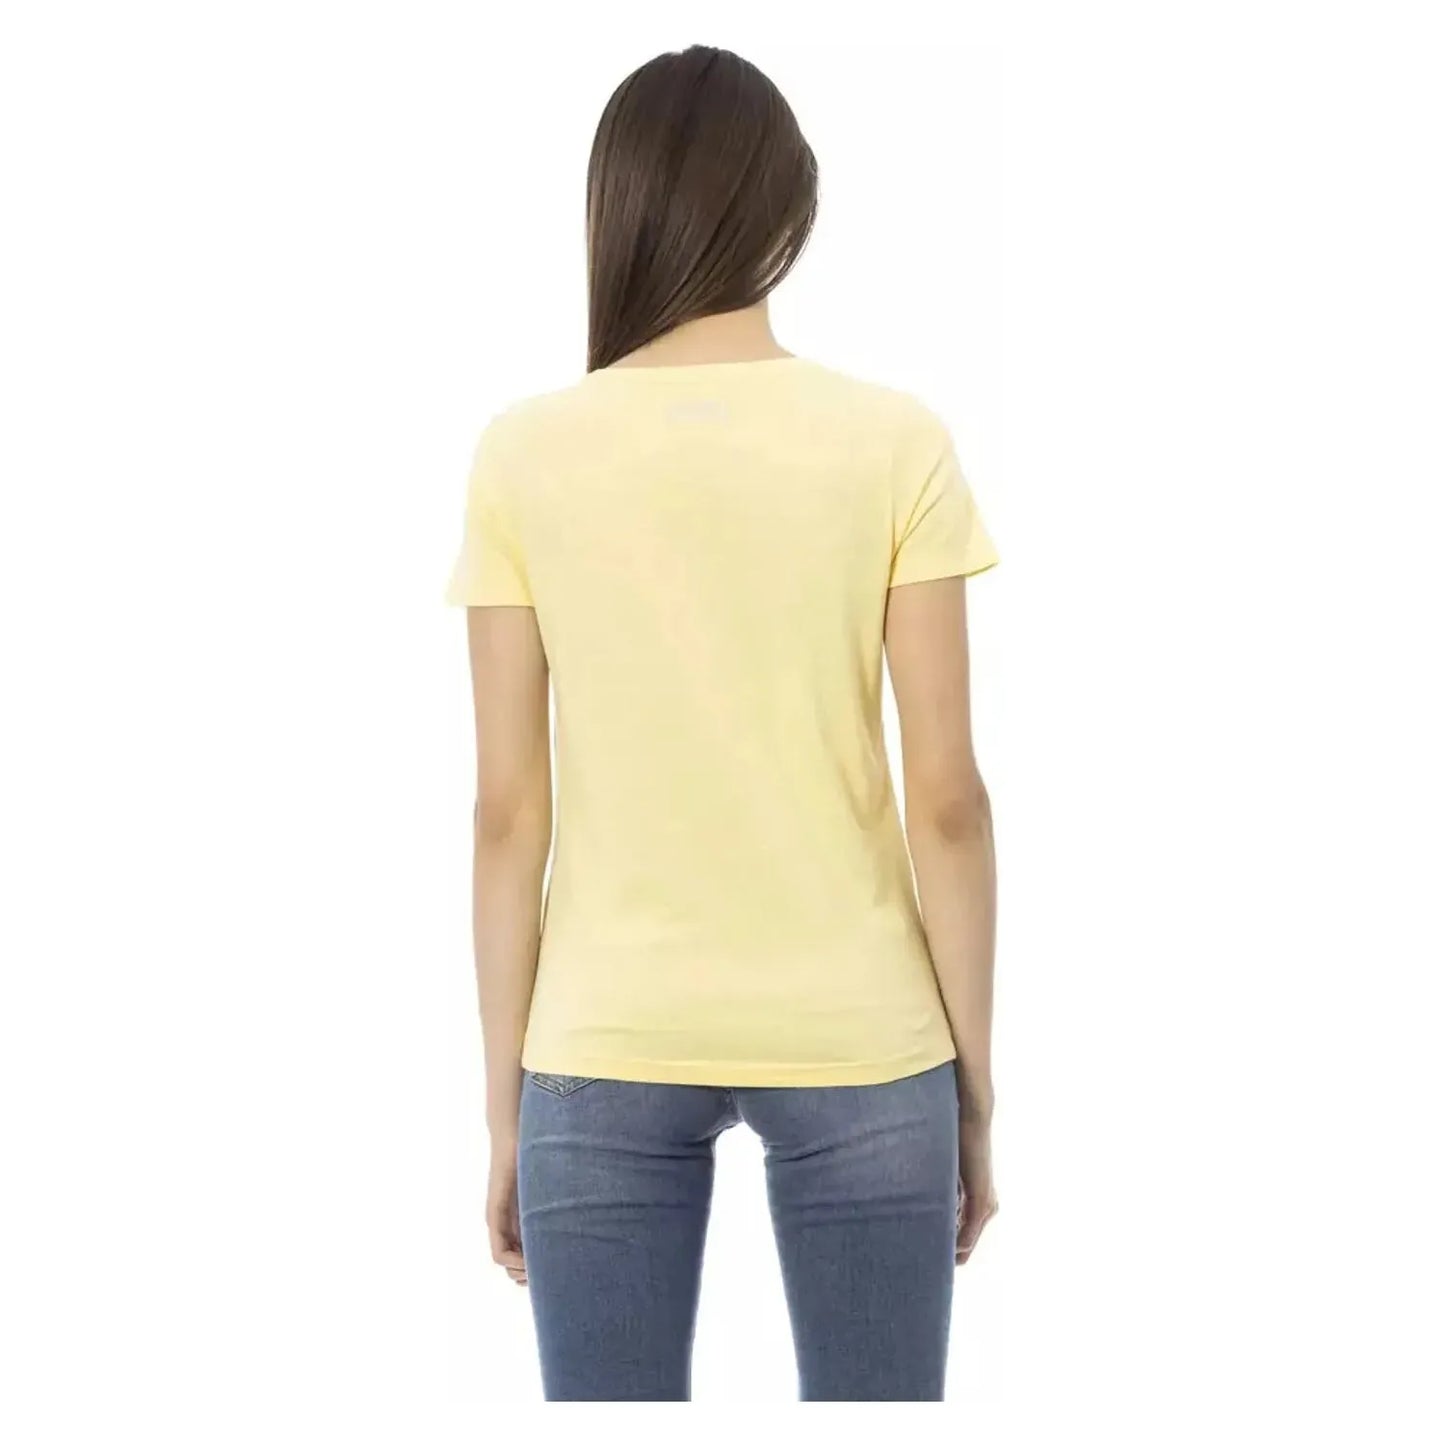 Trussardi Action Sunshine Yellow Casual Chic Tee yellow-cotton-tops-t-shirt-7